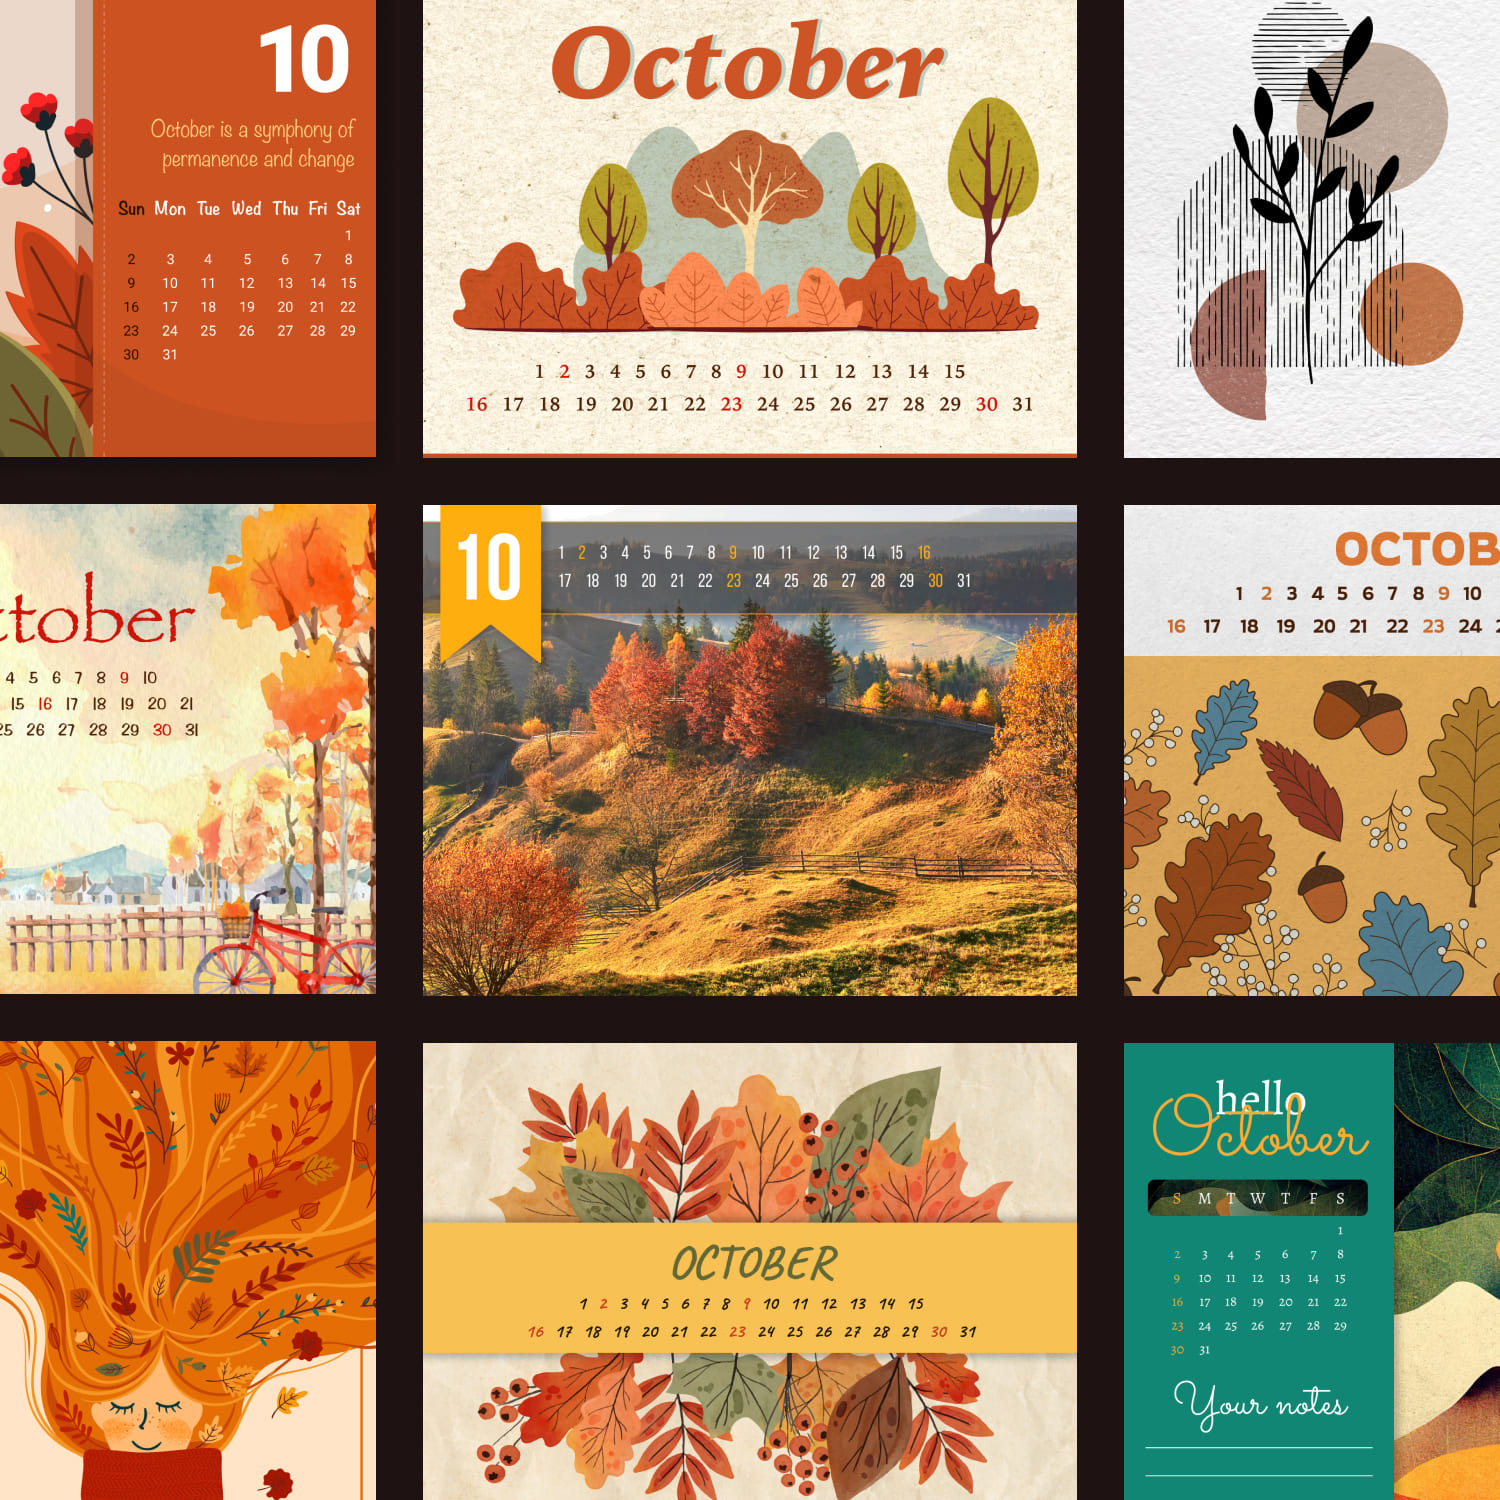 Calendar October cover image 2.